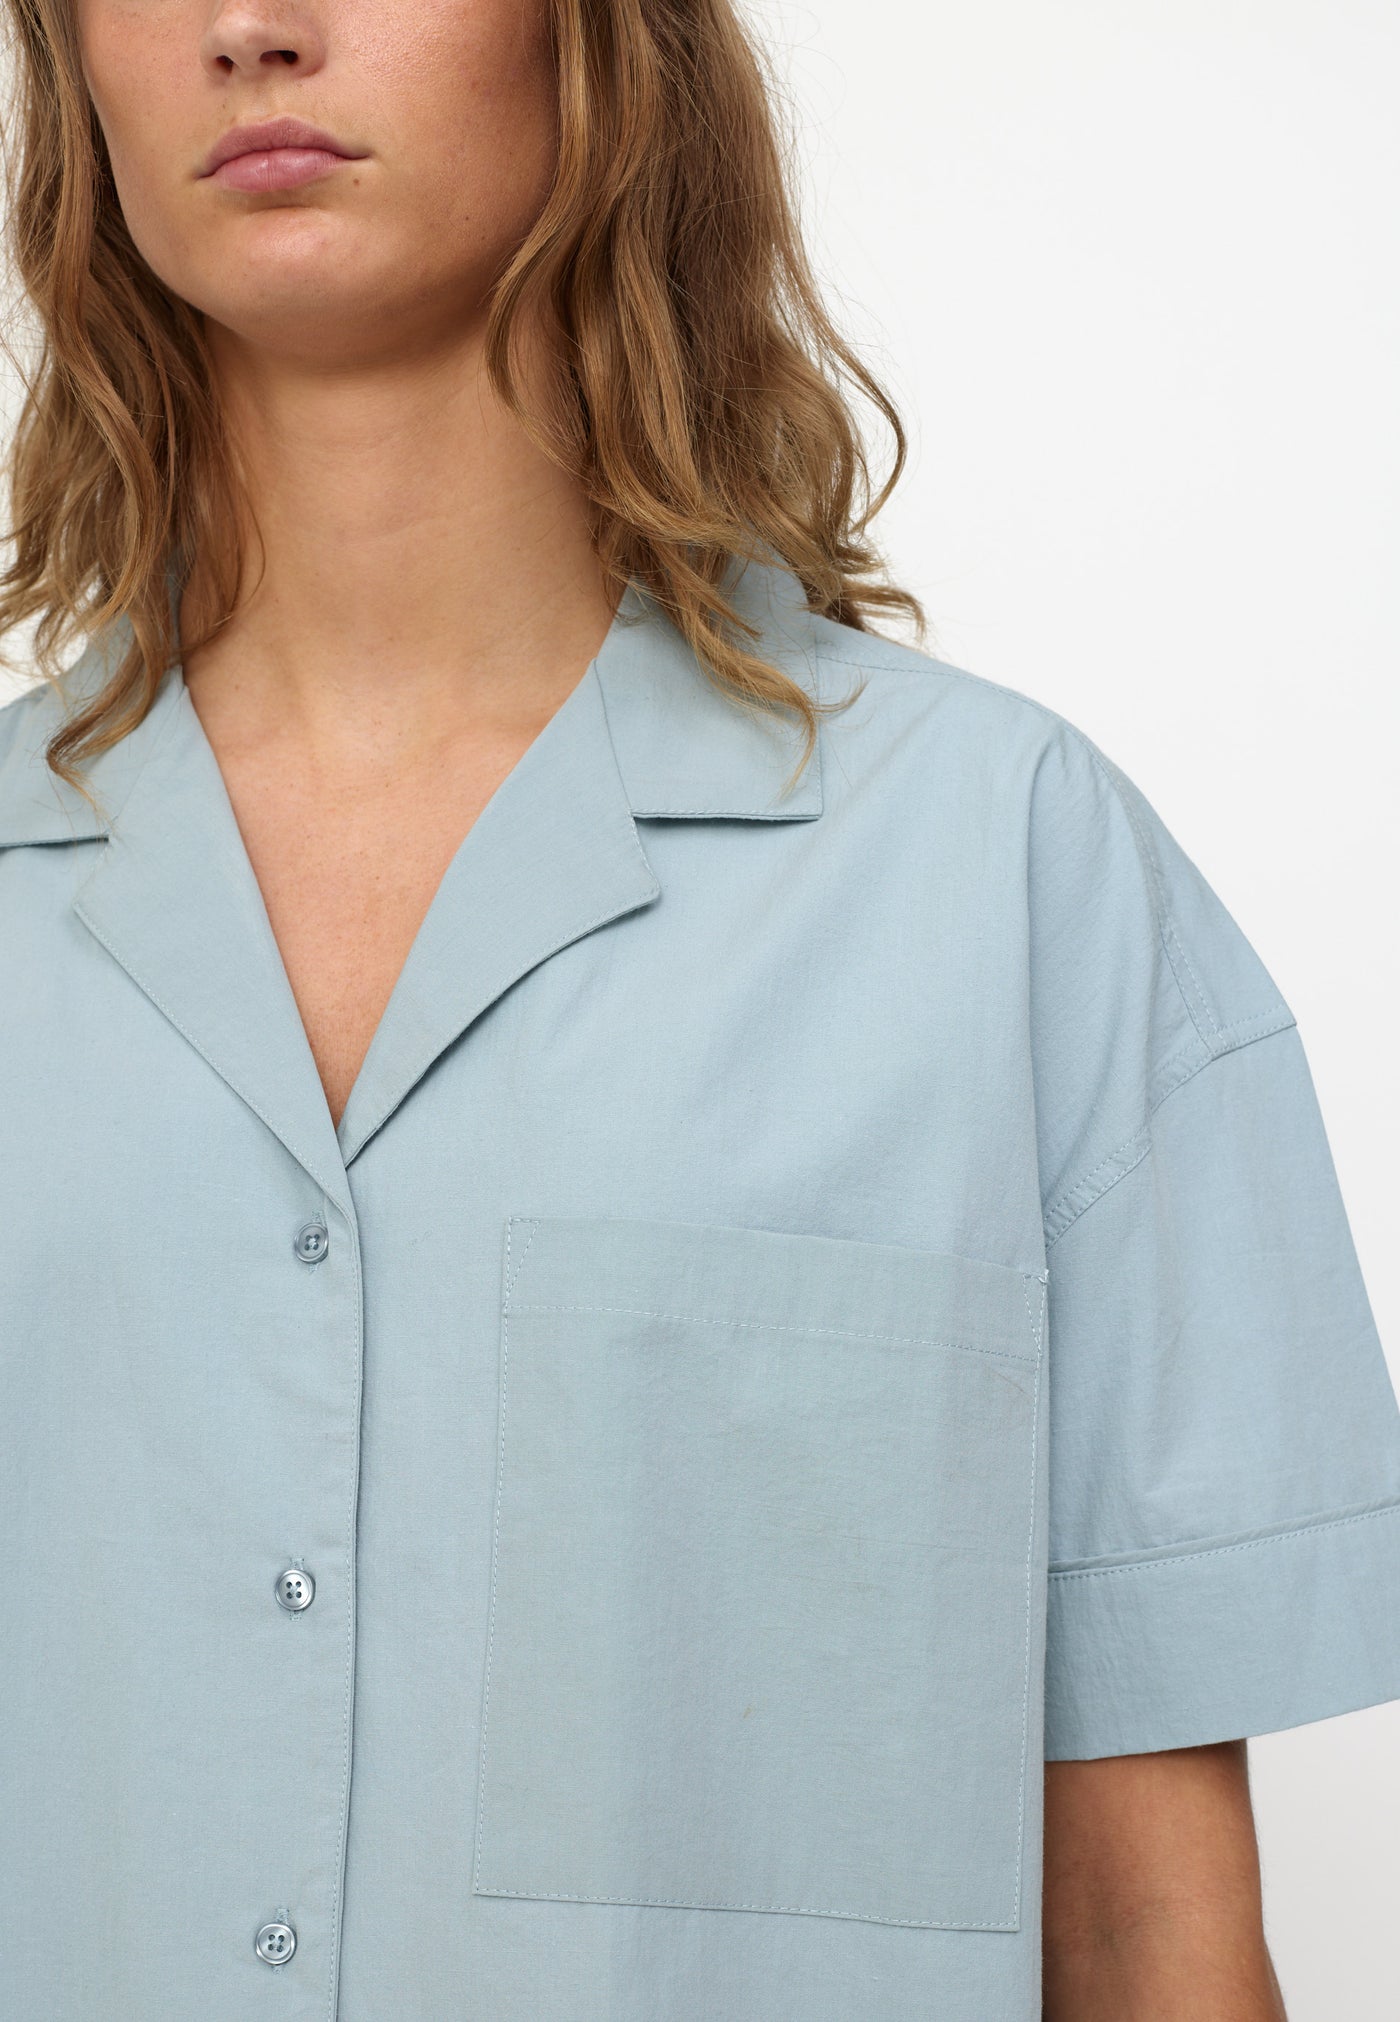 esmé studios ESRuby Resort Shirt - GOTS Homewear 203 Blue Fog